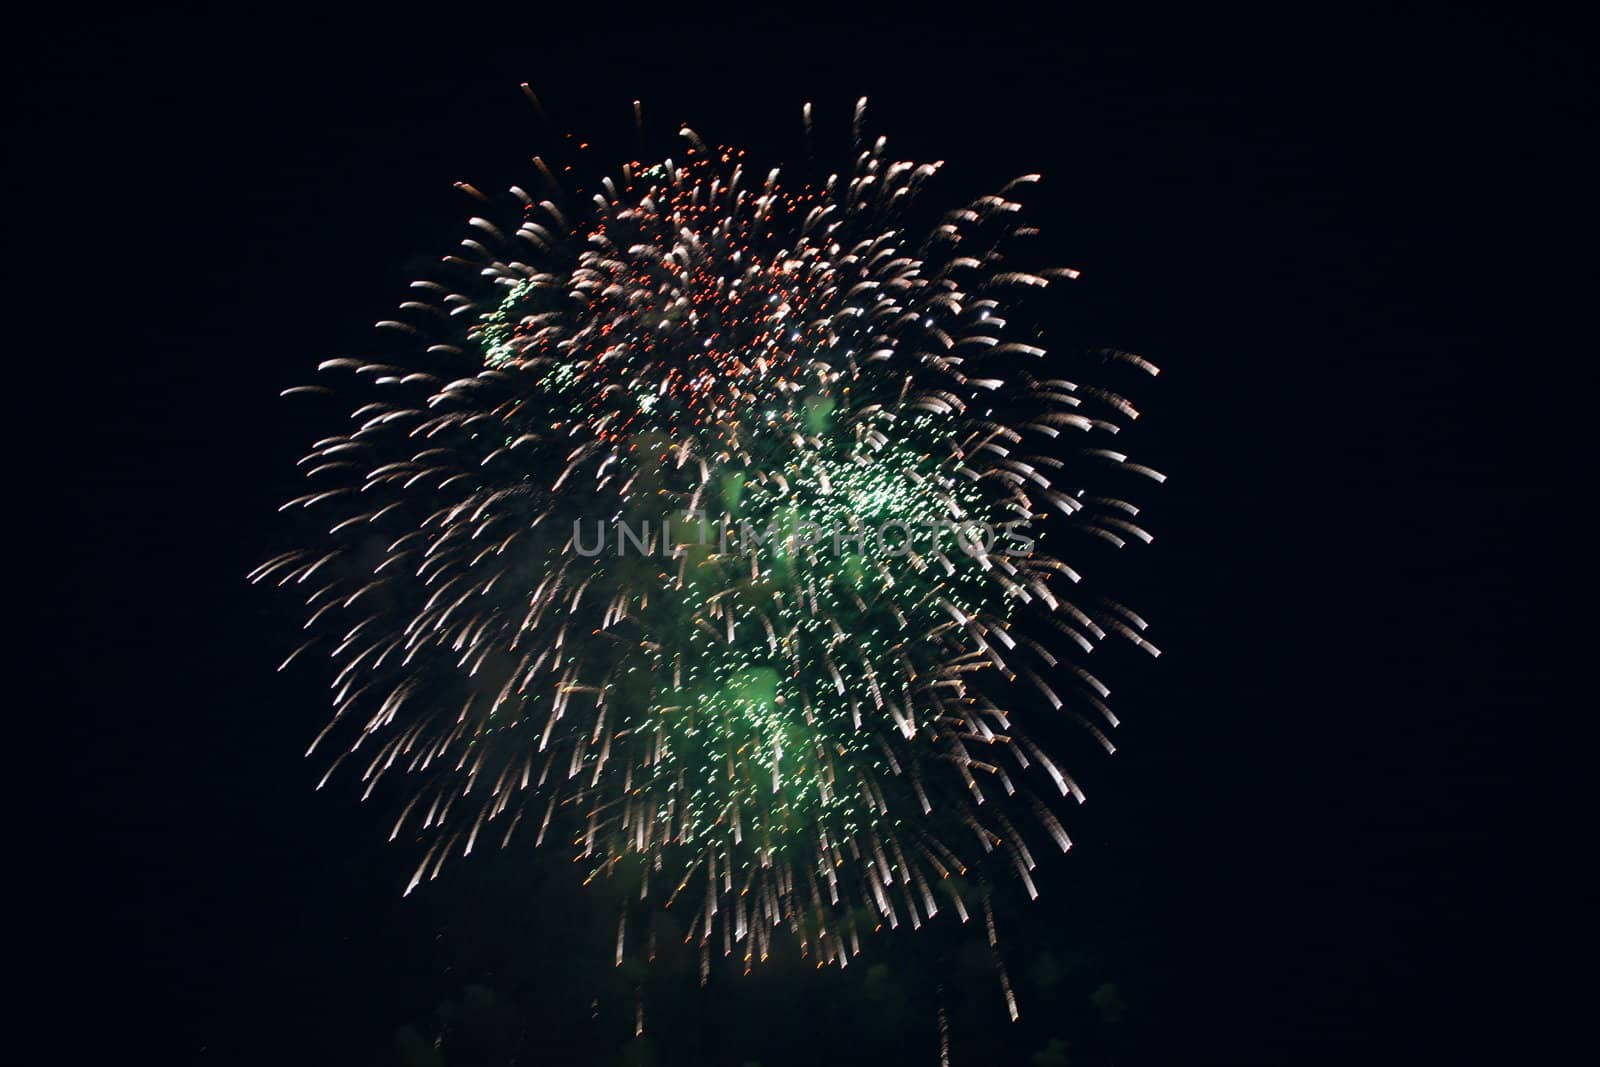 Fireworks image by richardcoke